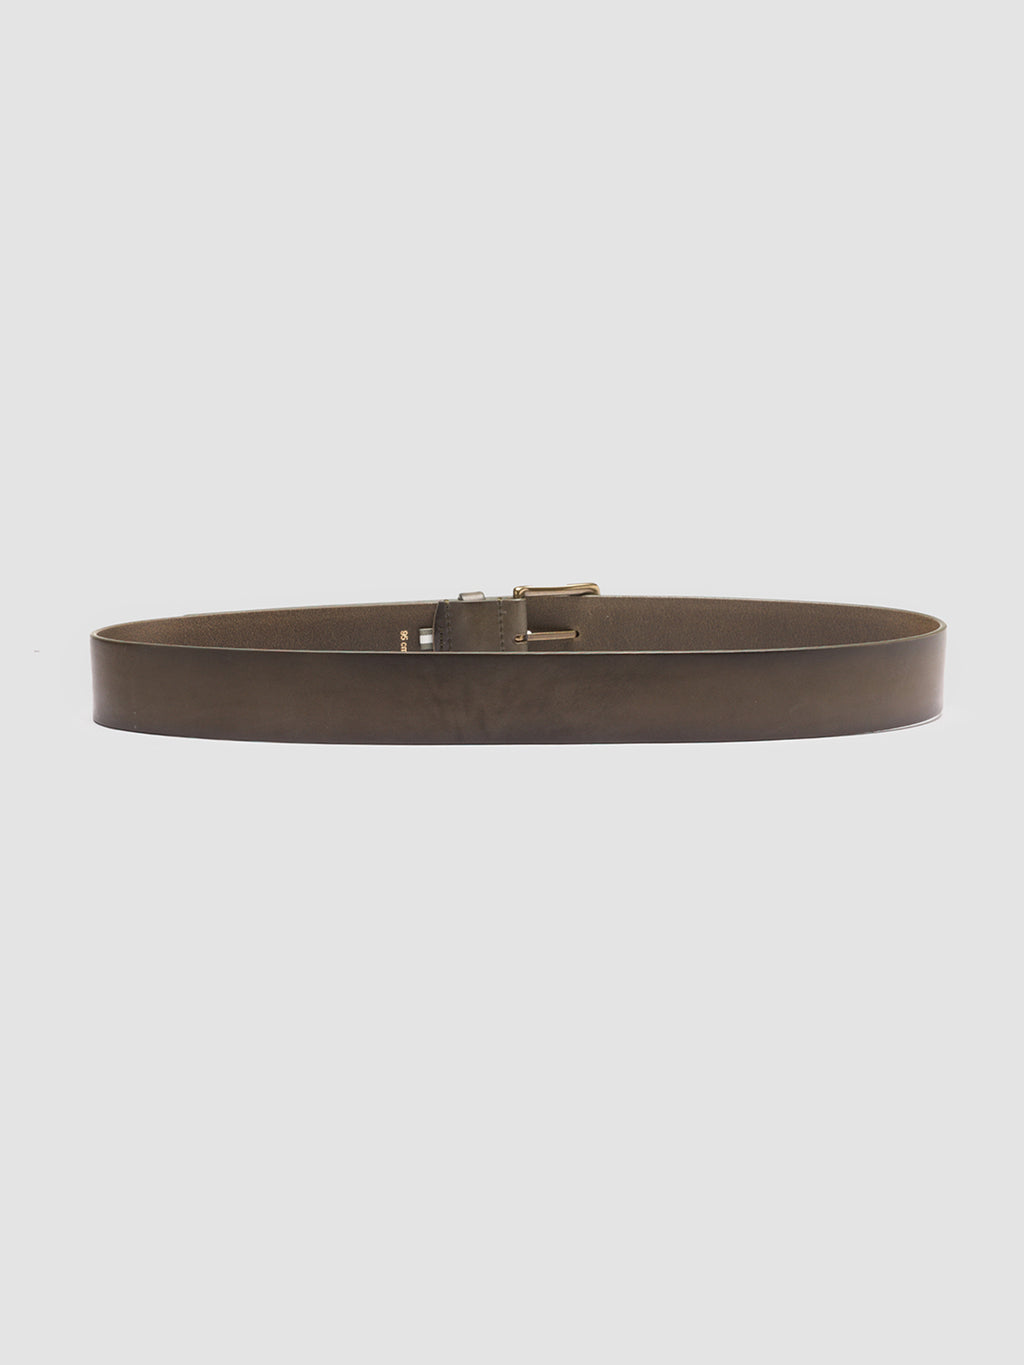 OC STRIP 22 - Green Leather belt  Officine Creative - 3